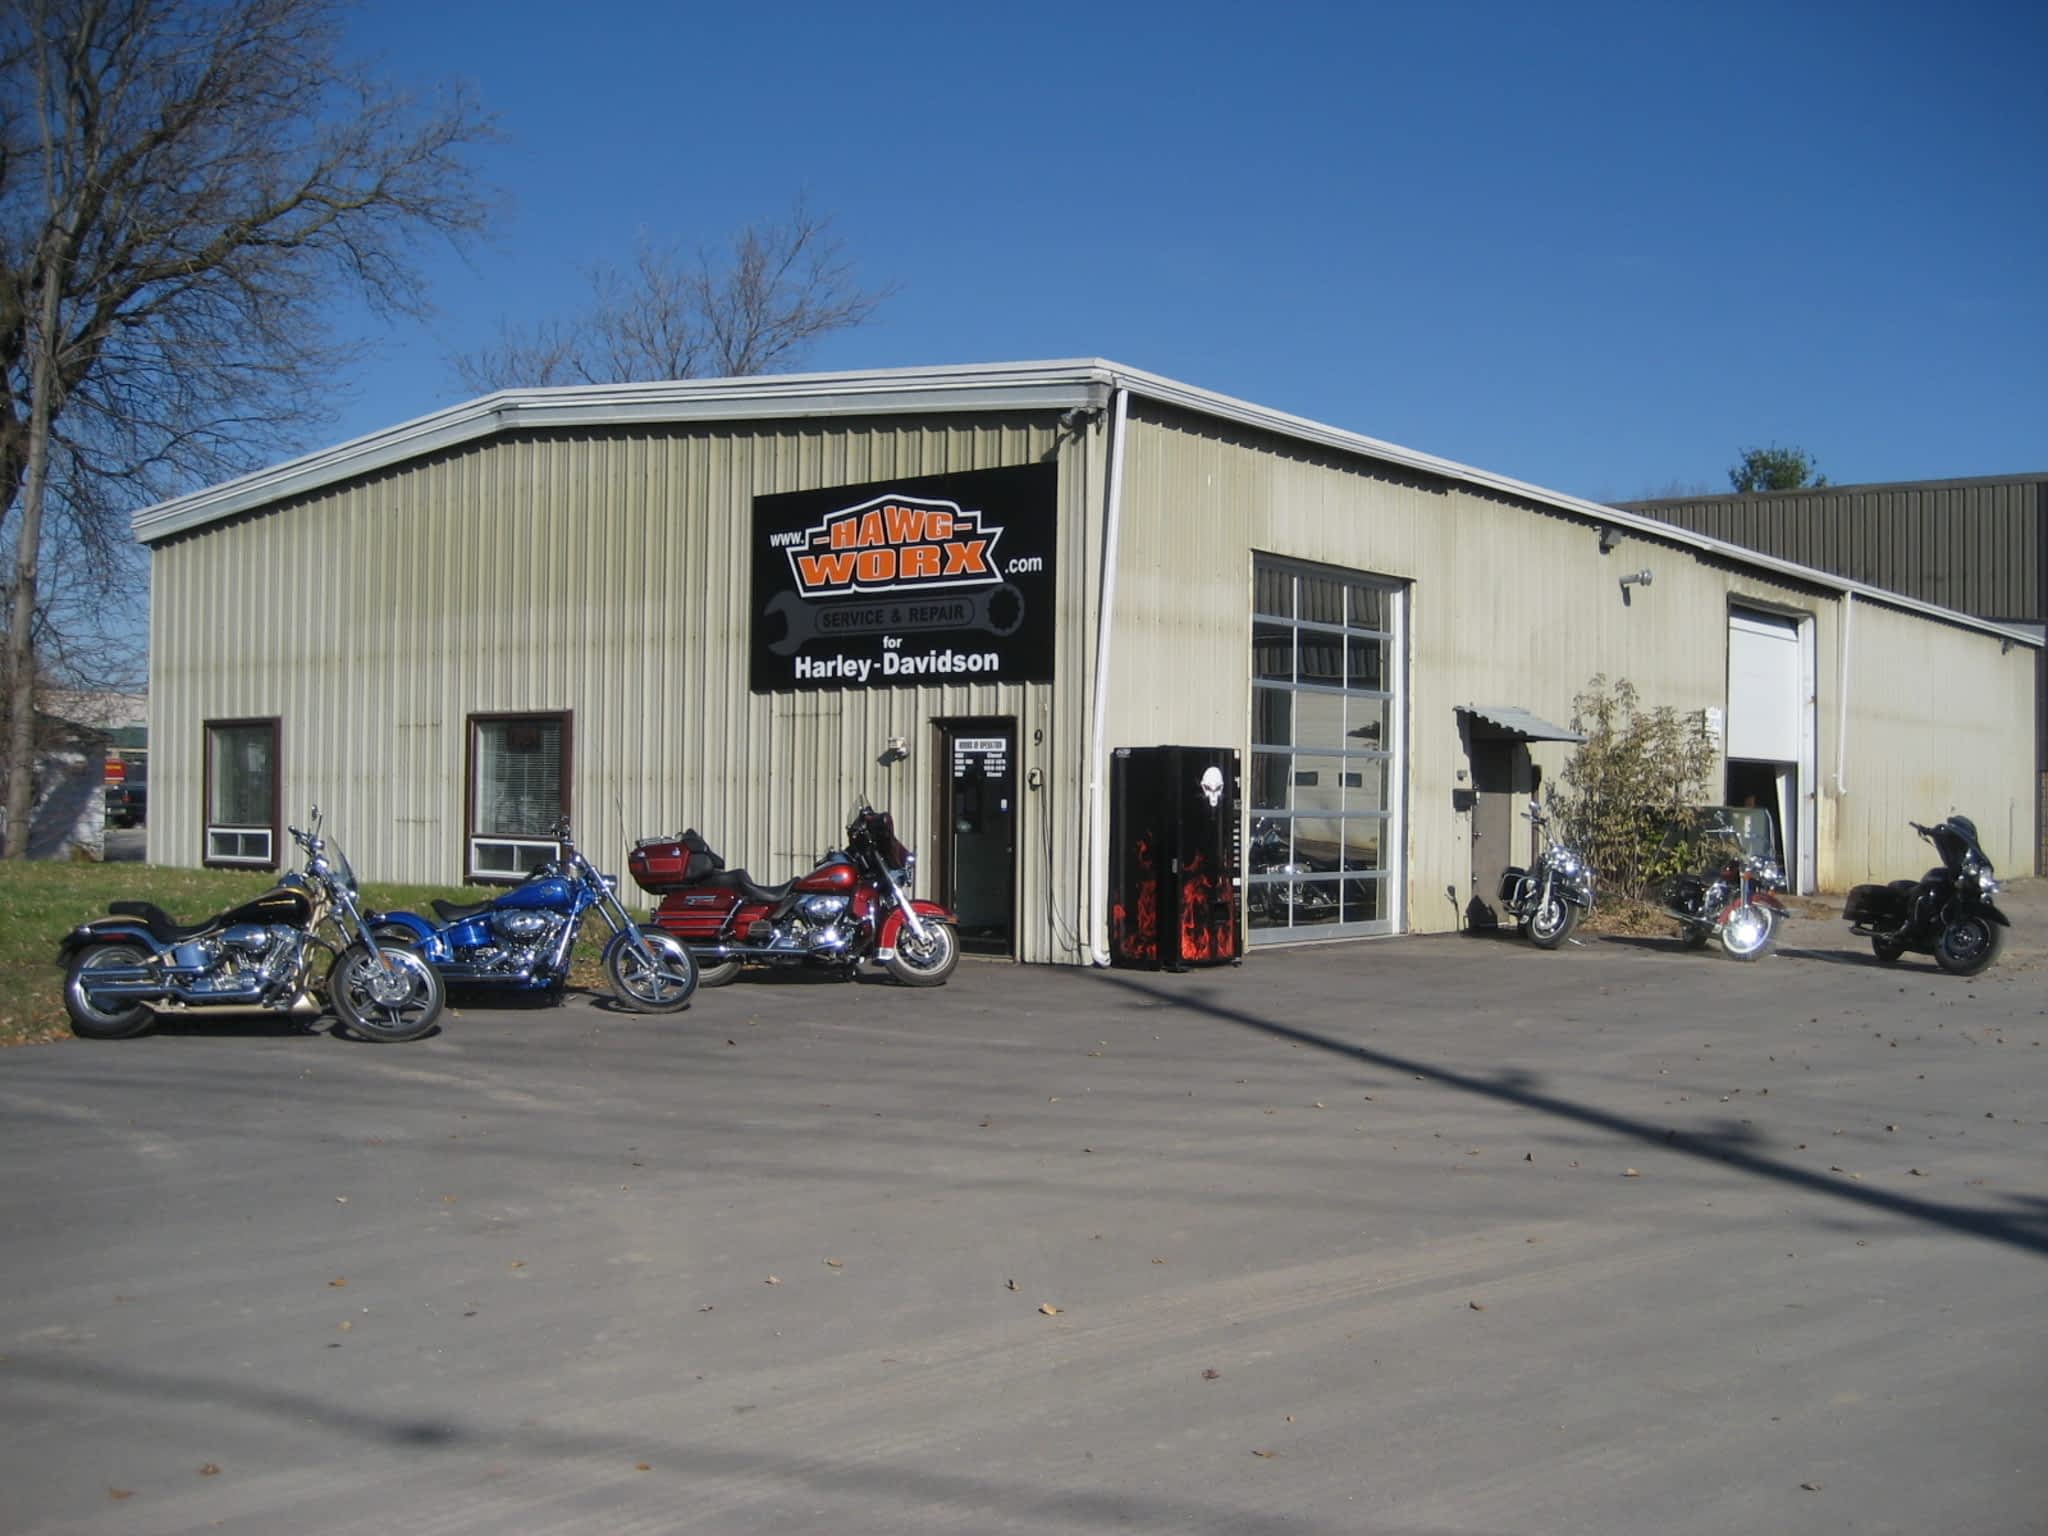 photo Hawg Worx Service & Repair For Harley Davidson